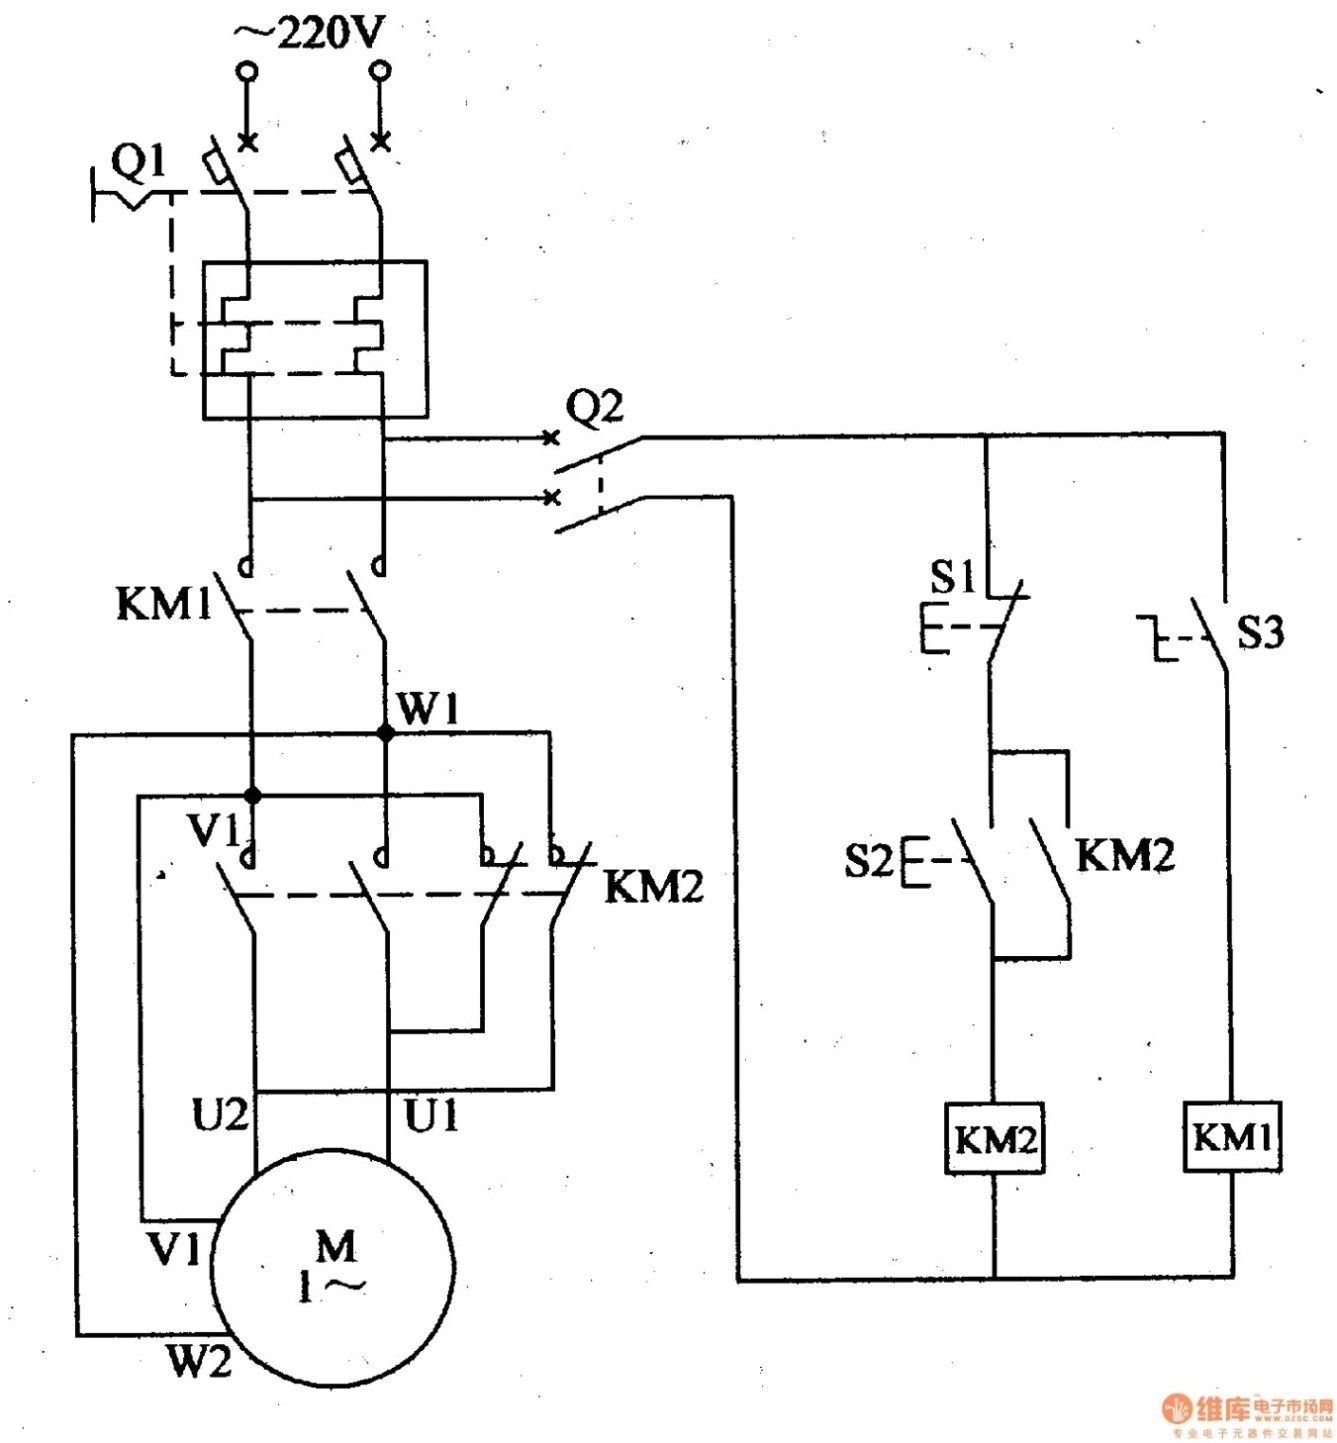 3 phase 6 lead motor wiring diagram